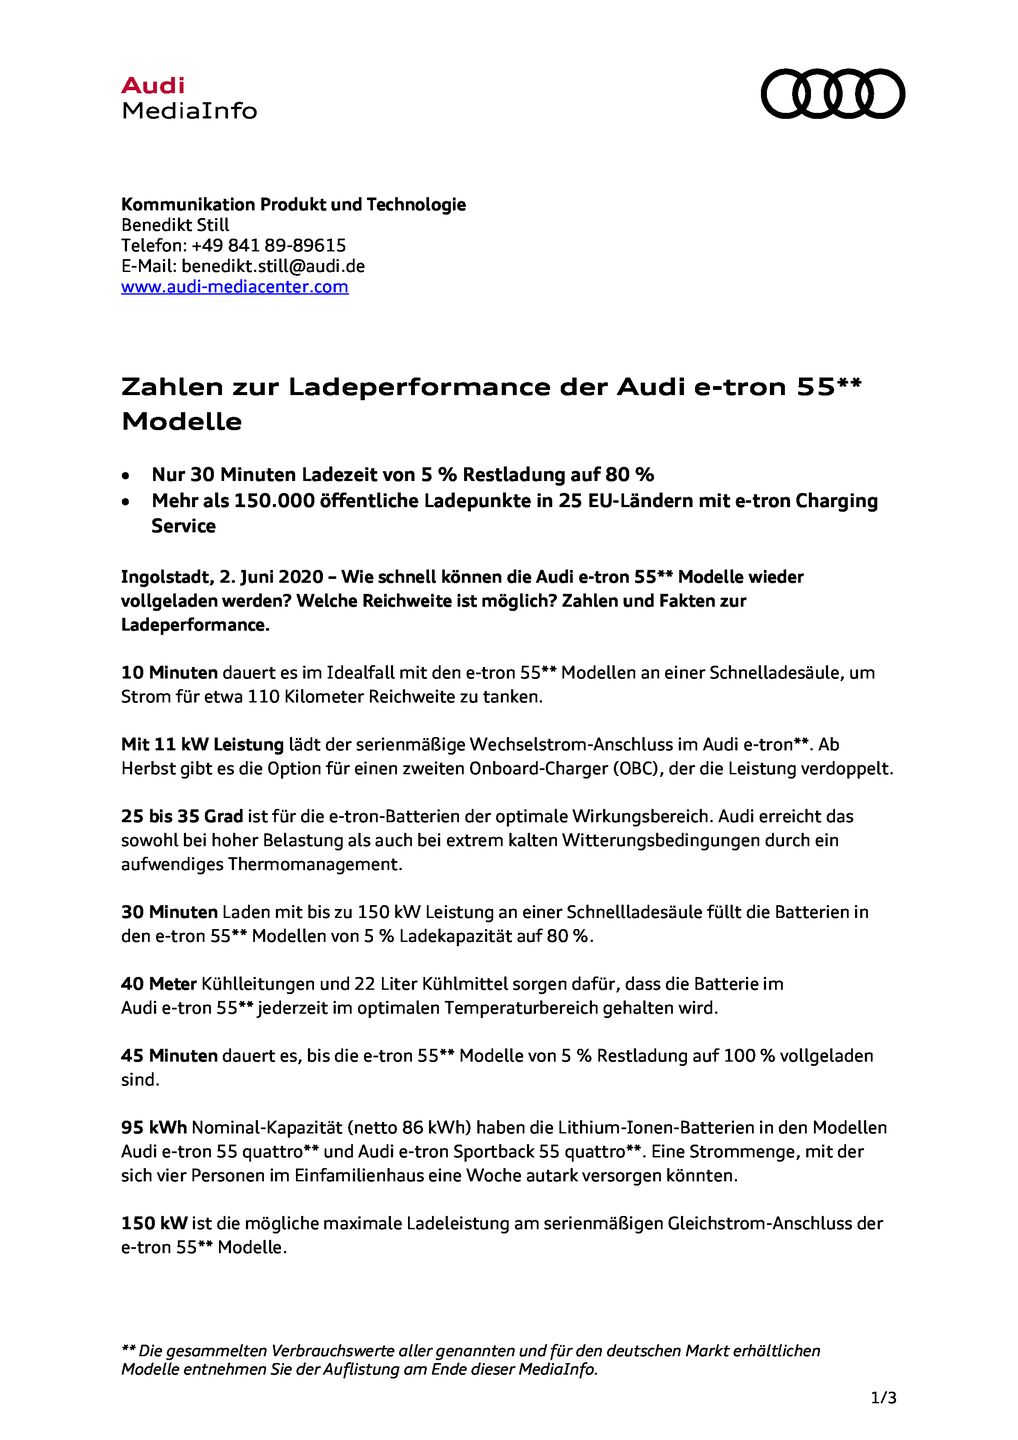 Zahlen zur Ladeperformance der Audi e-tron 55** Modelle